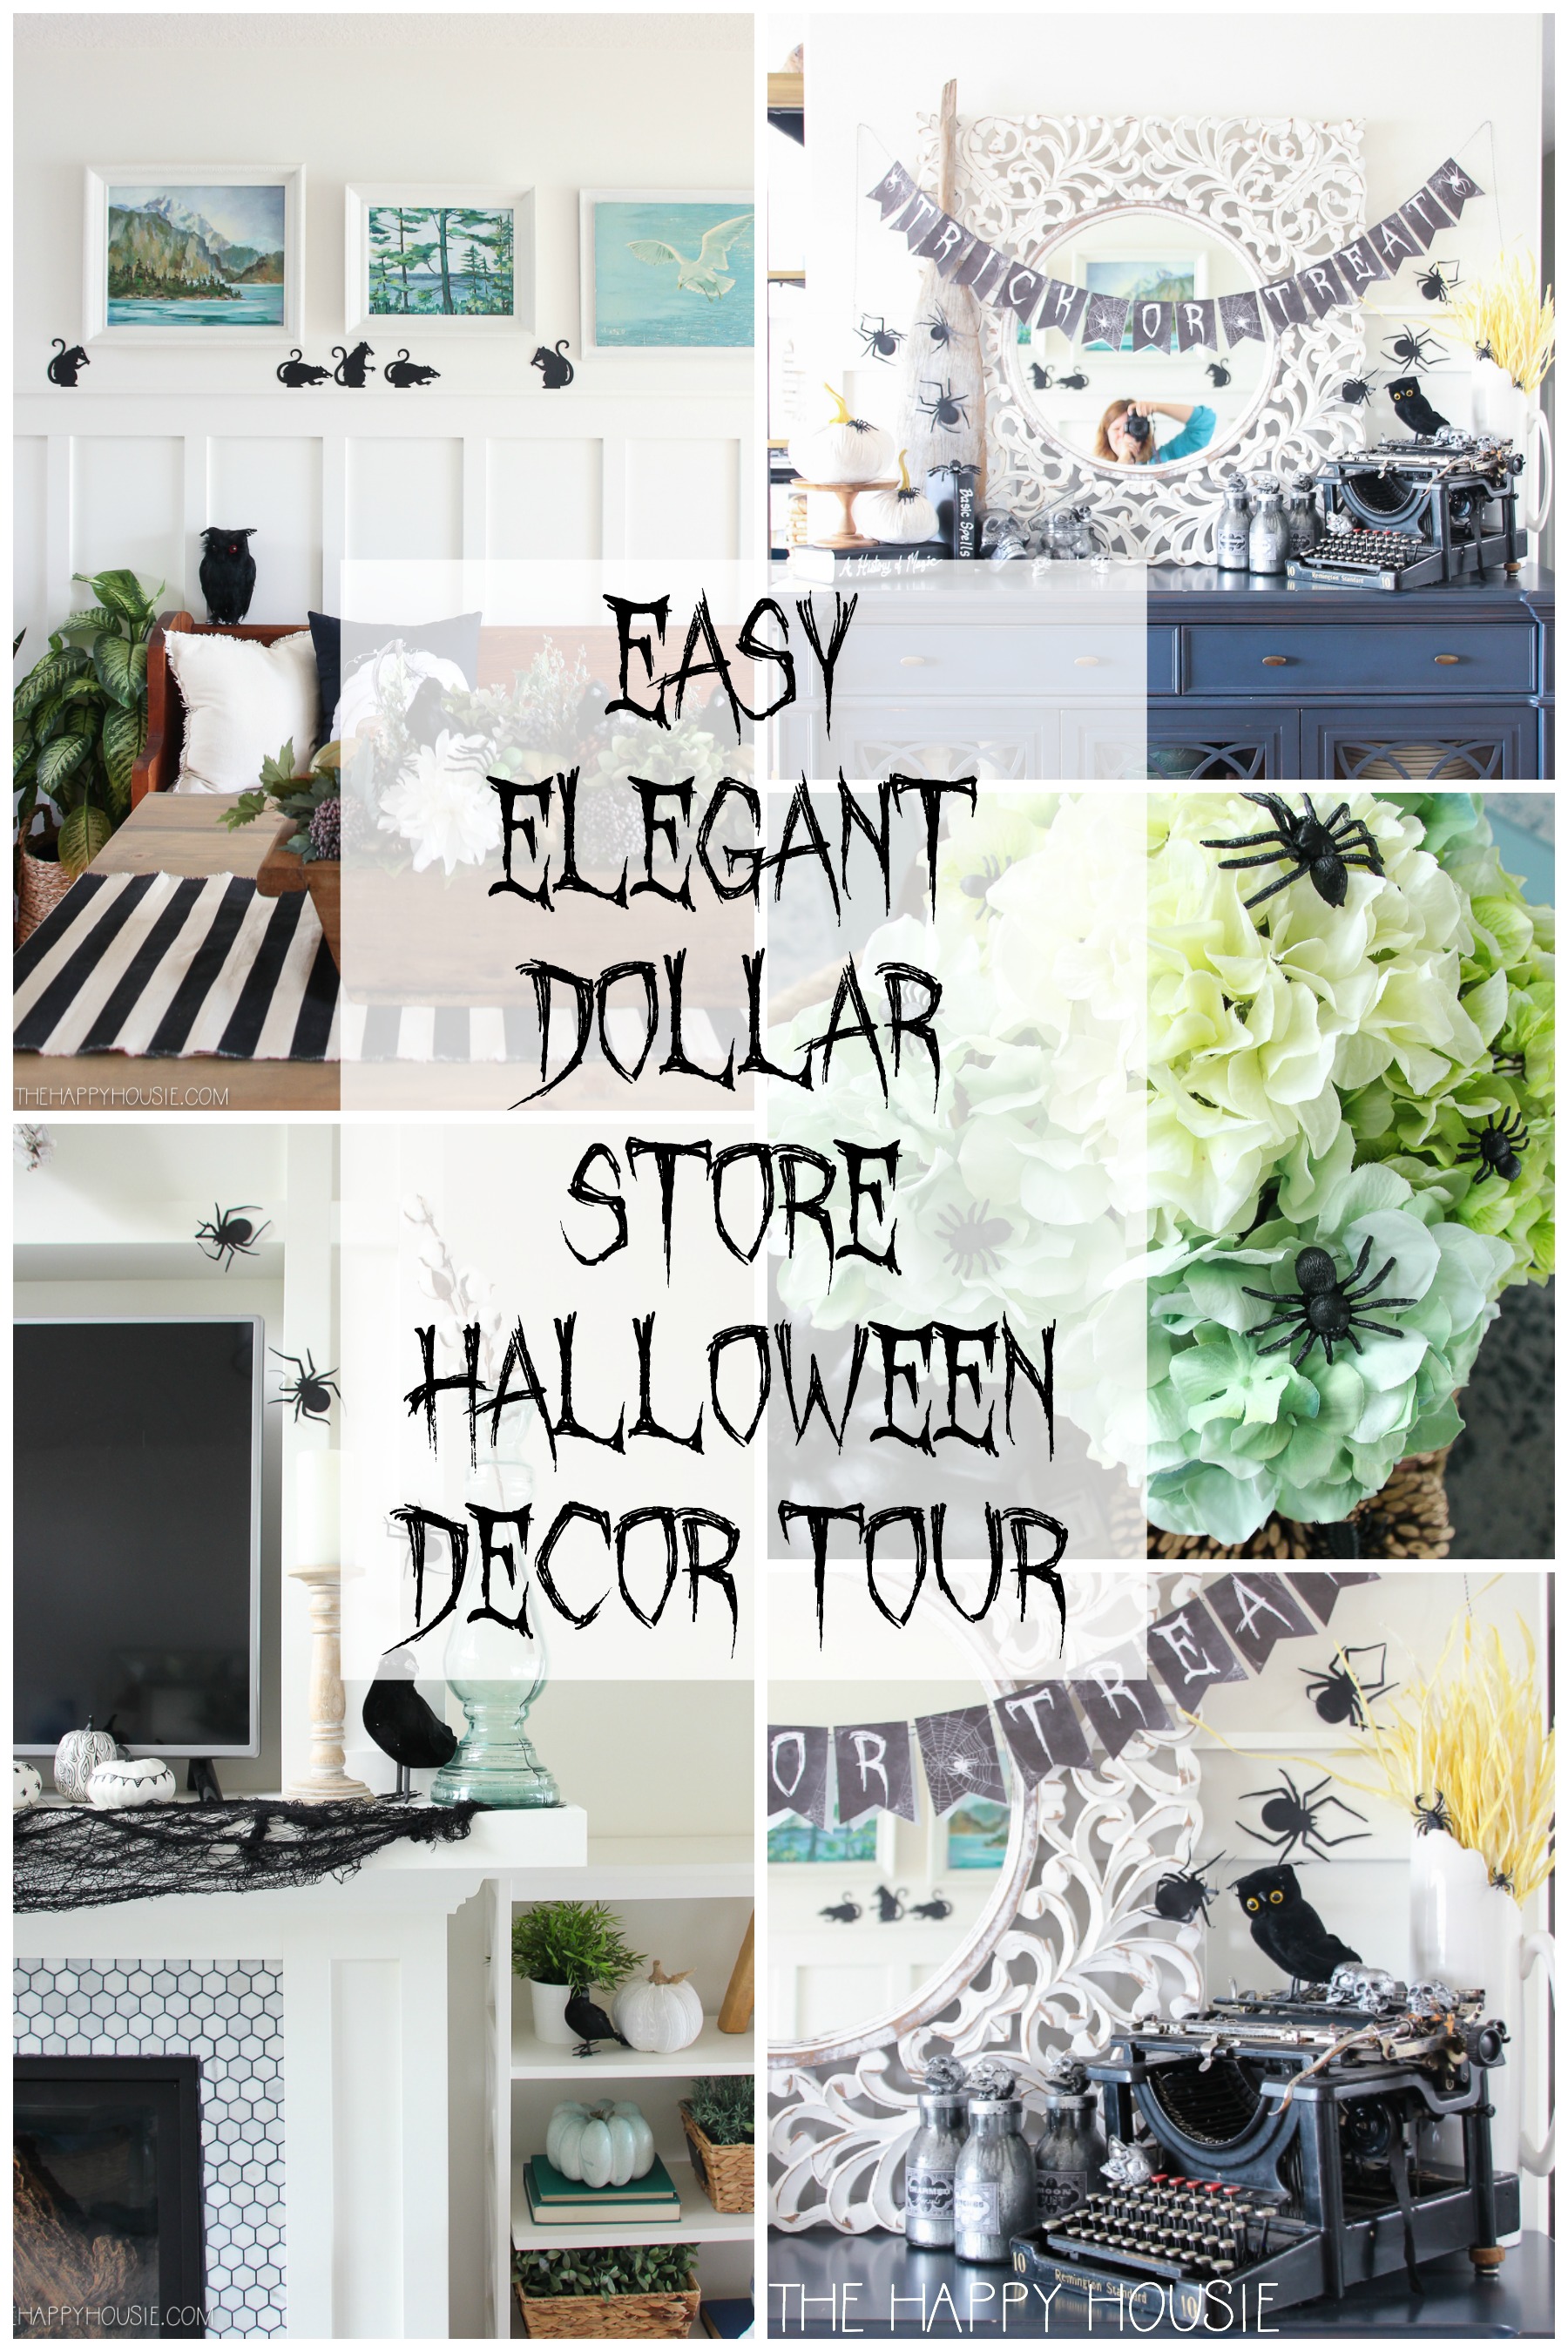 Easy Elegant Dollar Store Halloween Decor Tour graphic.